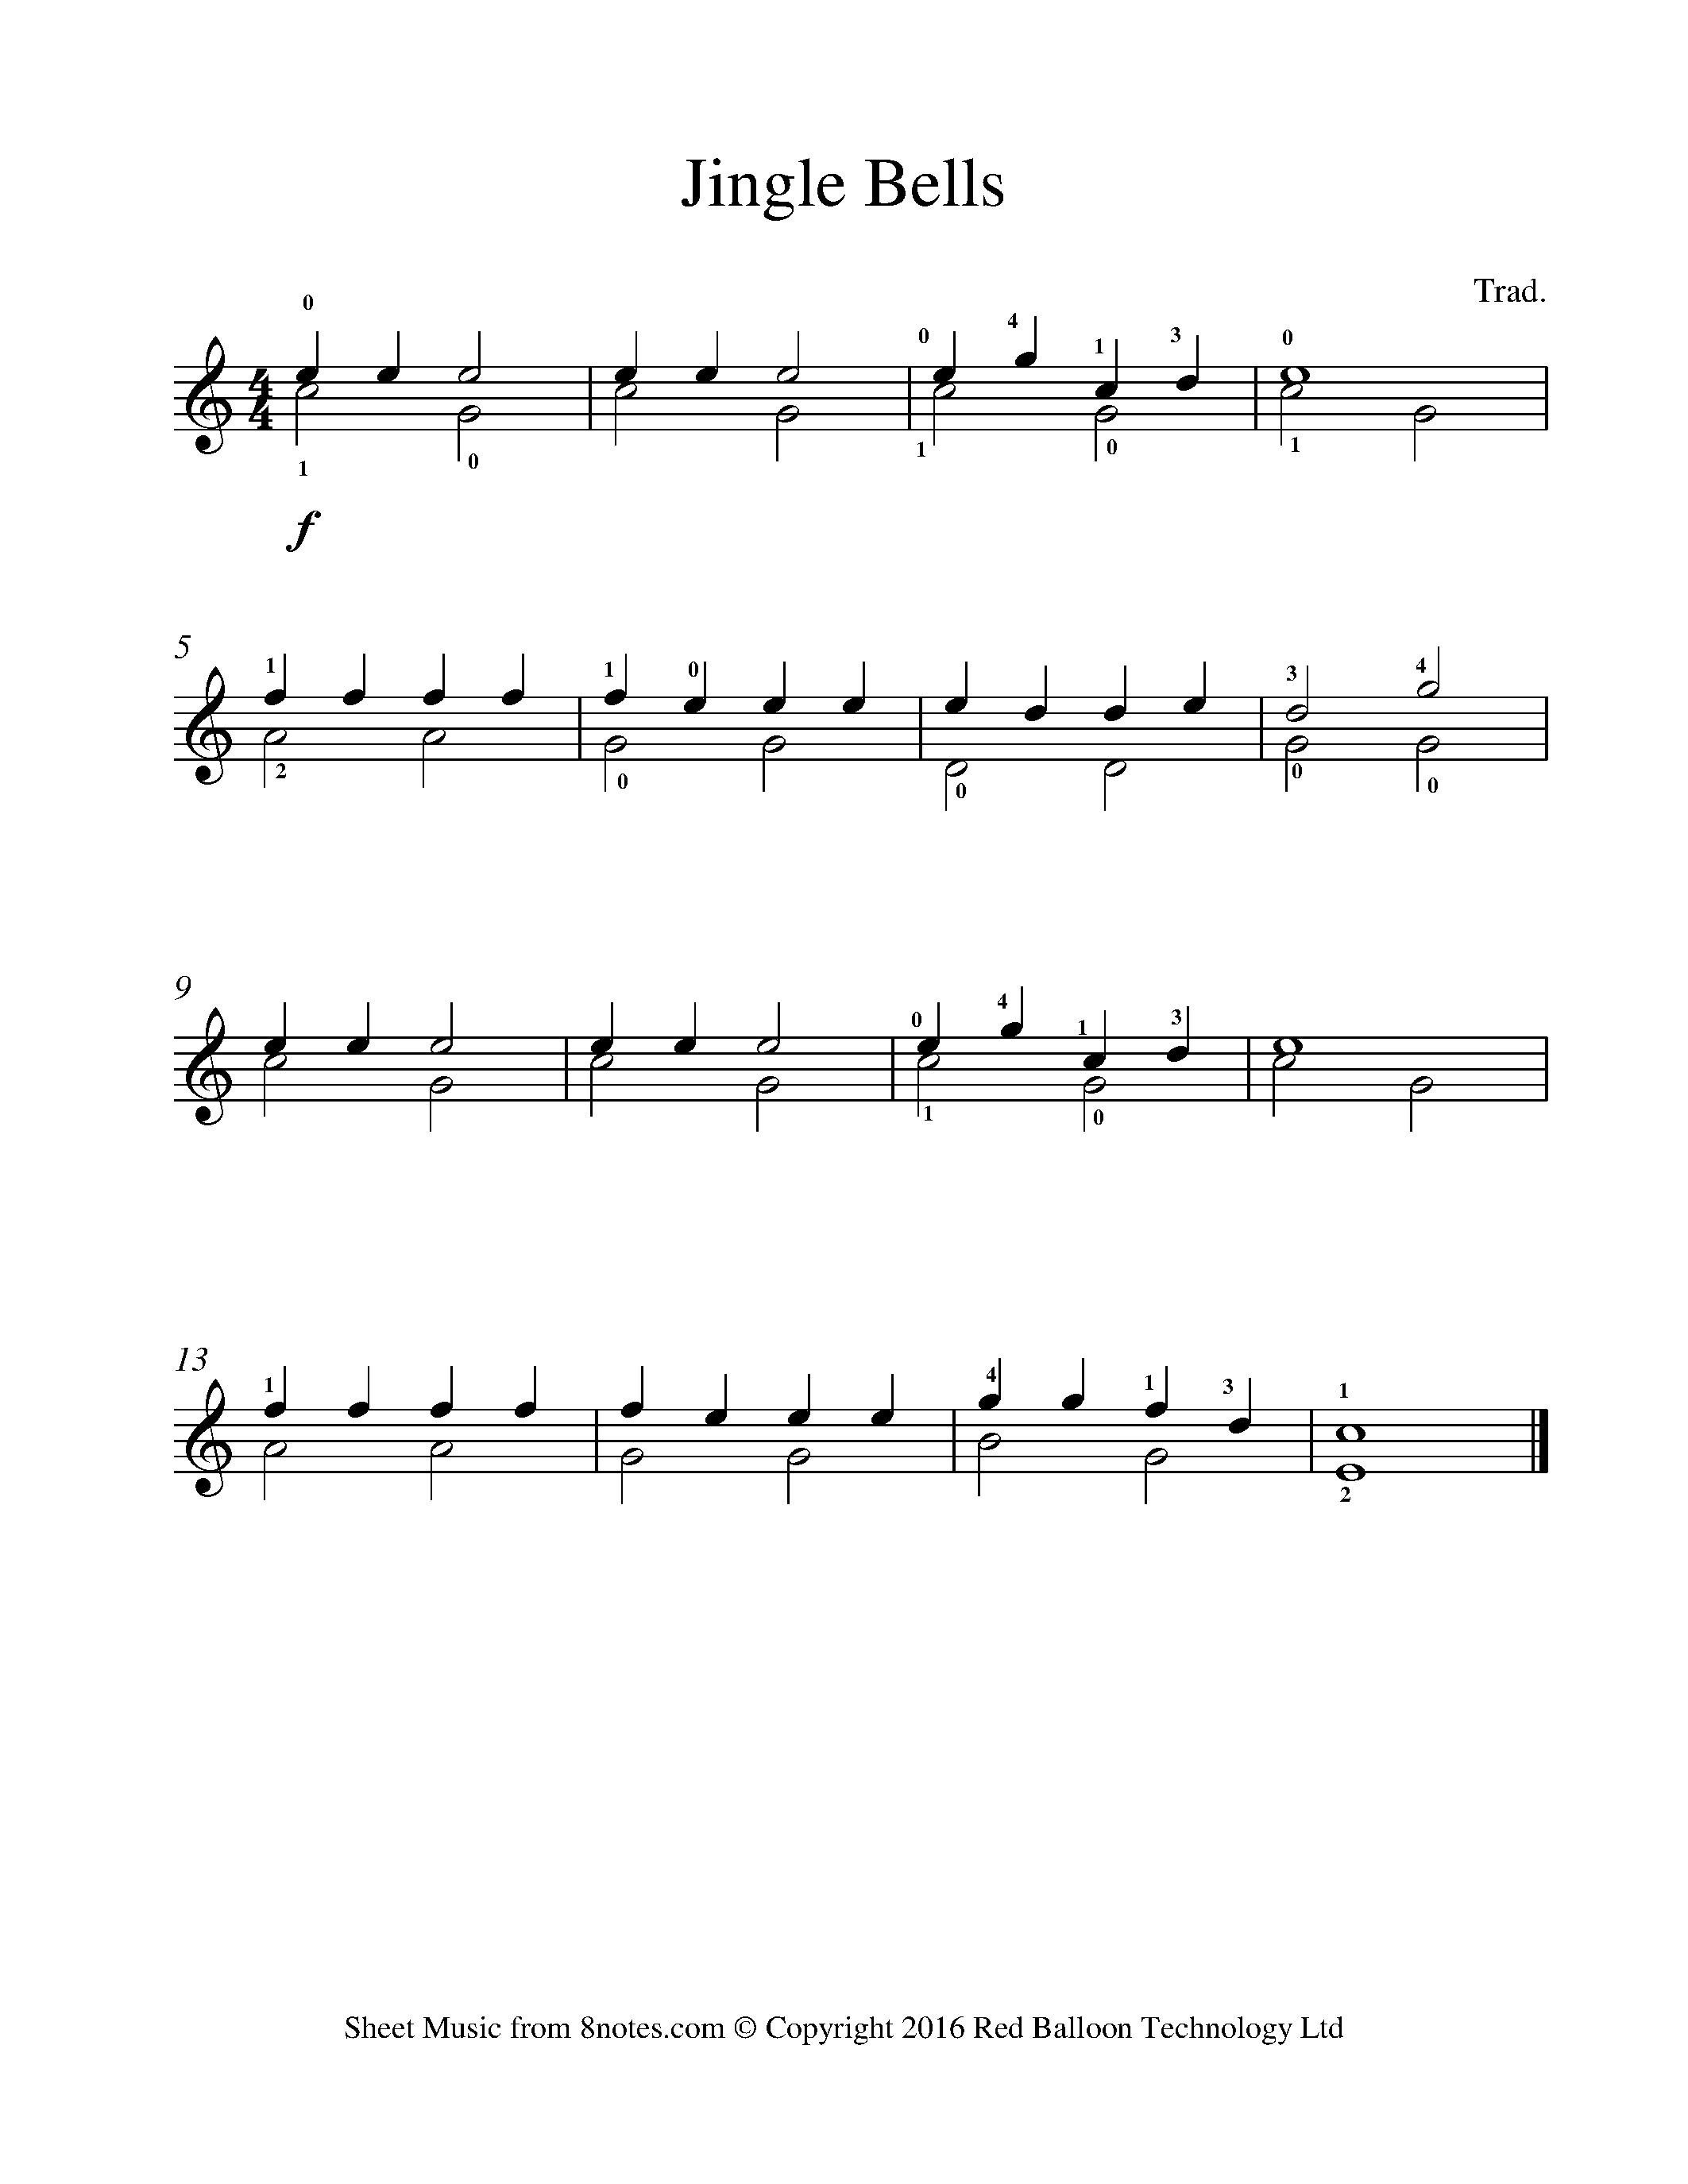 jingle-bells-sheet-music-for-guitar-8notes